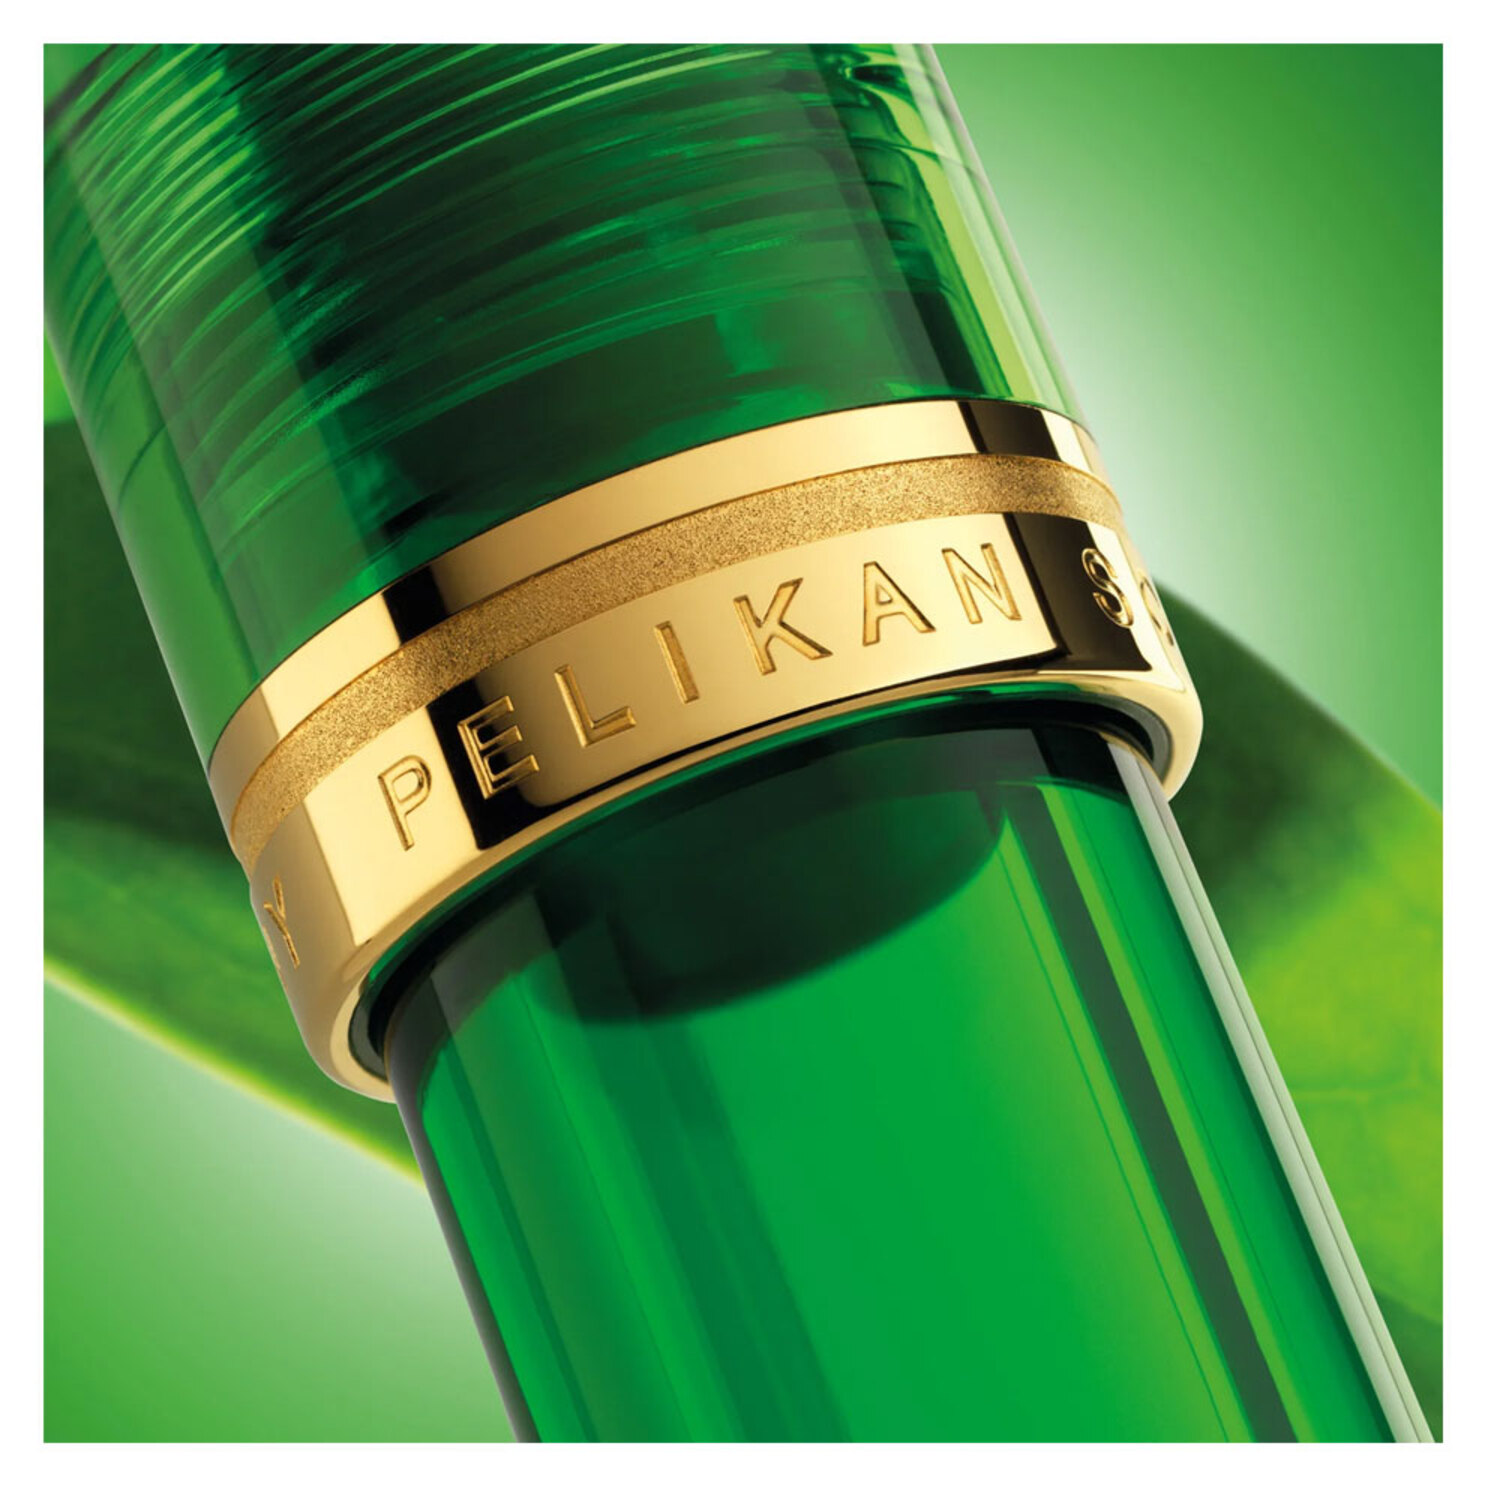 Pelikan Souveran M800 Dolma Kalem Demonstrator Green Special Edition